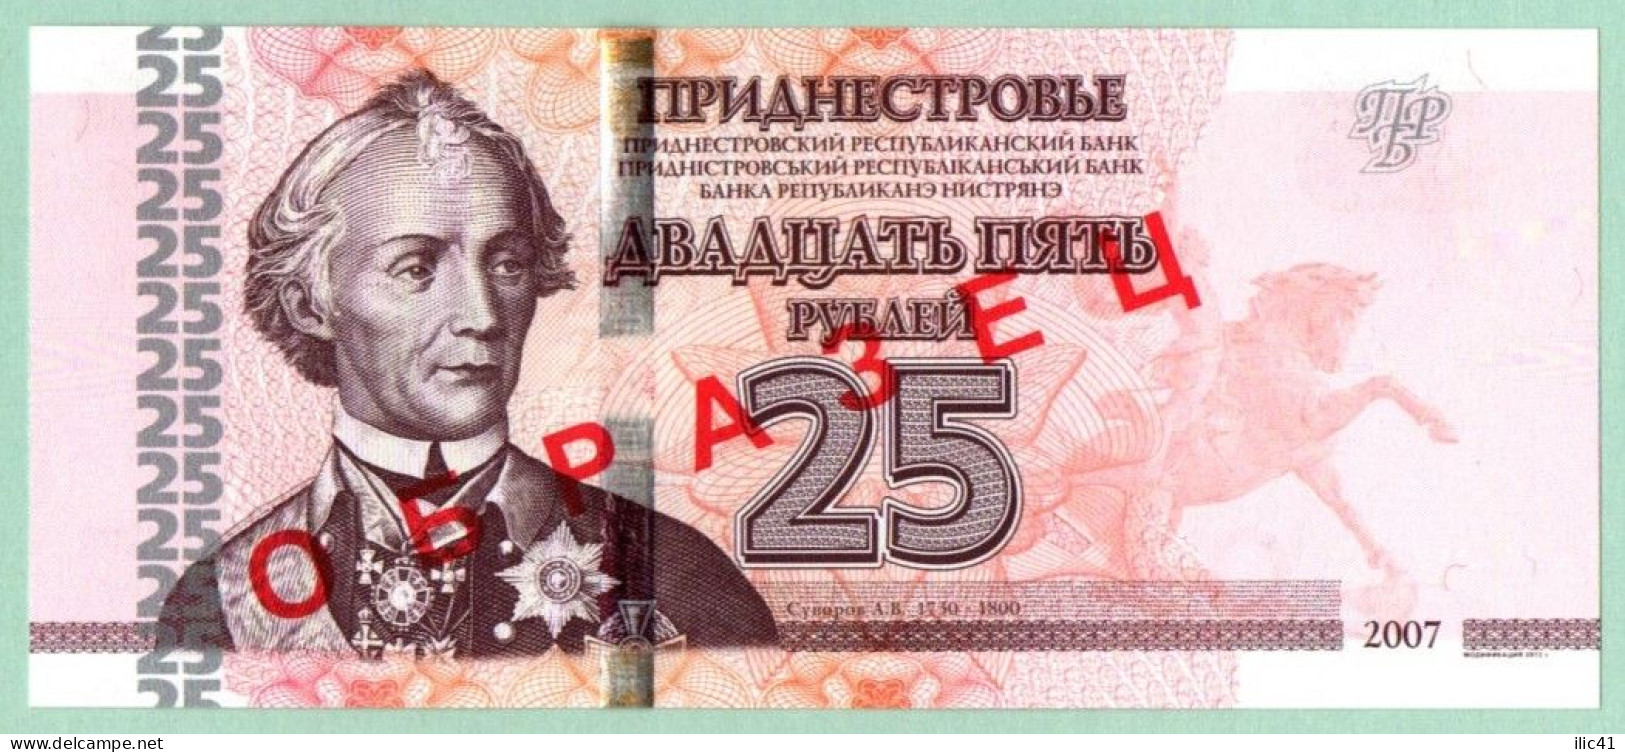 Moldova Moldova  Bancnote 2012 Din Transnistria 25 Rublu SAMPLE Din Toate Cele Trei Emisiuni   UNC - Moldavië